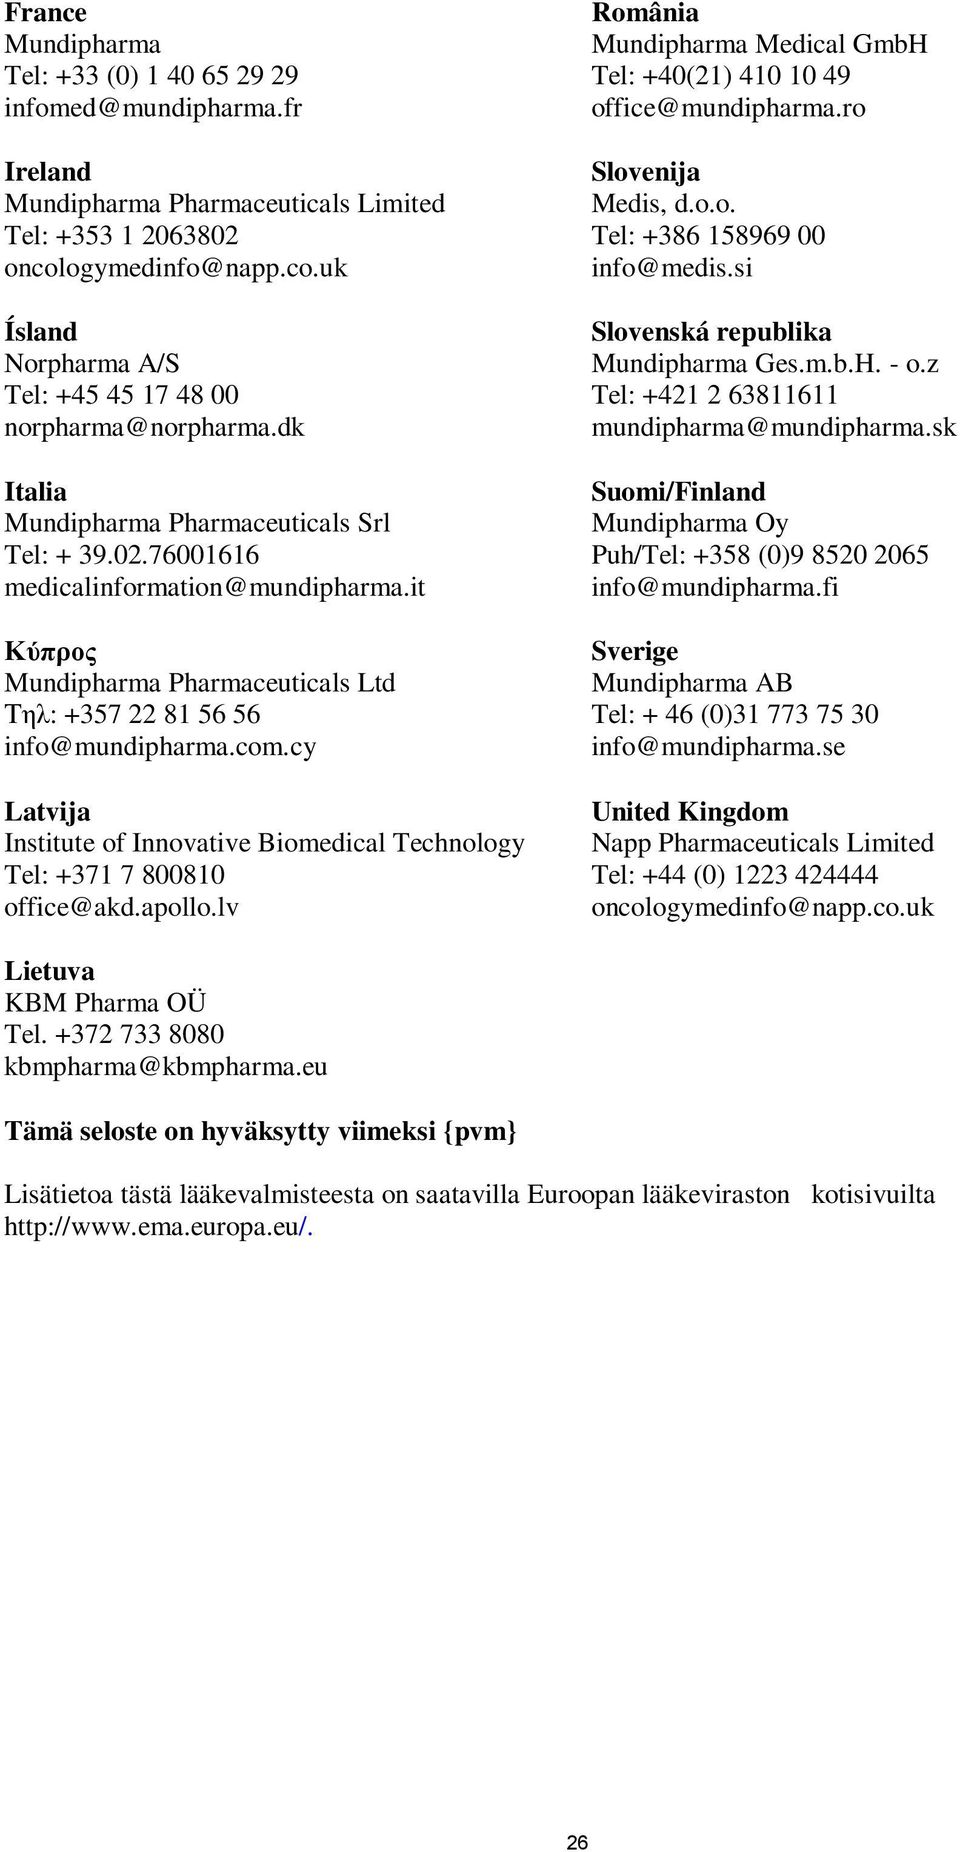 it Κύπρος Mundipharma Pharmaceuticals Ltd Τηλ: +357 22 81 56 56 info@mundipharma.com.cy Latvija Institute of Innovative Biomedical Technology Tel: +371 7 800810 office@akd.apollo.